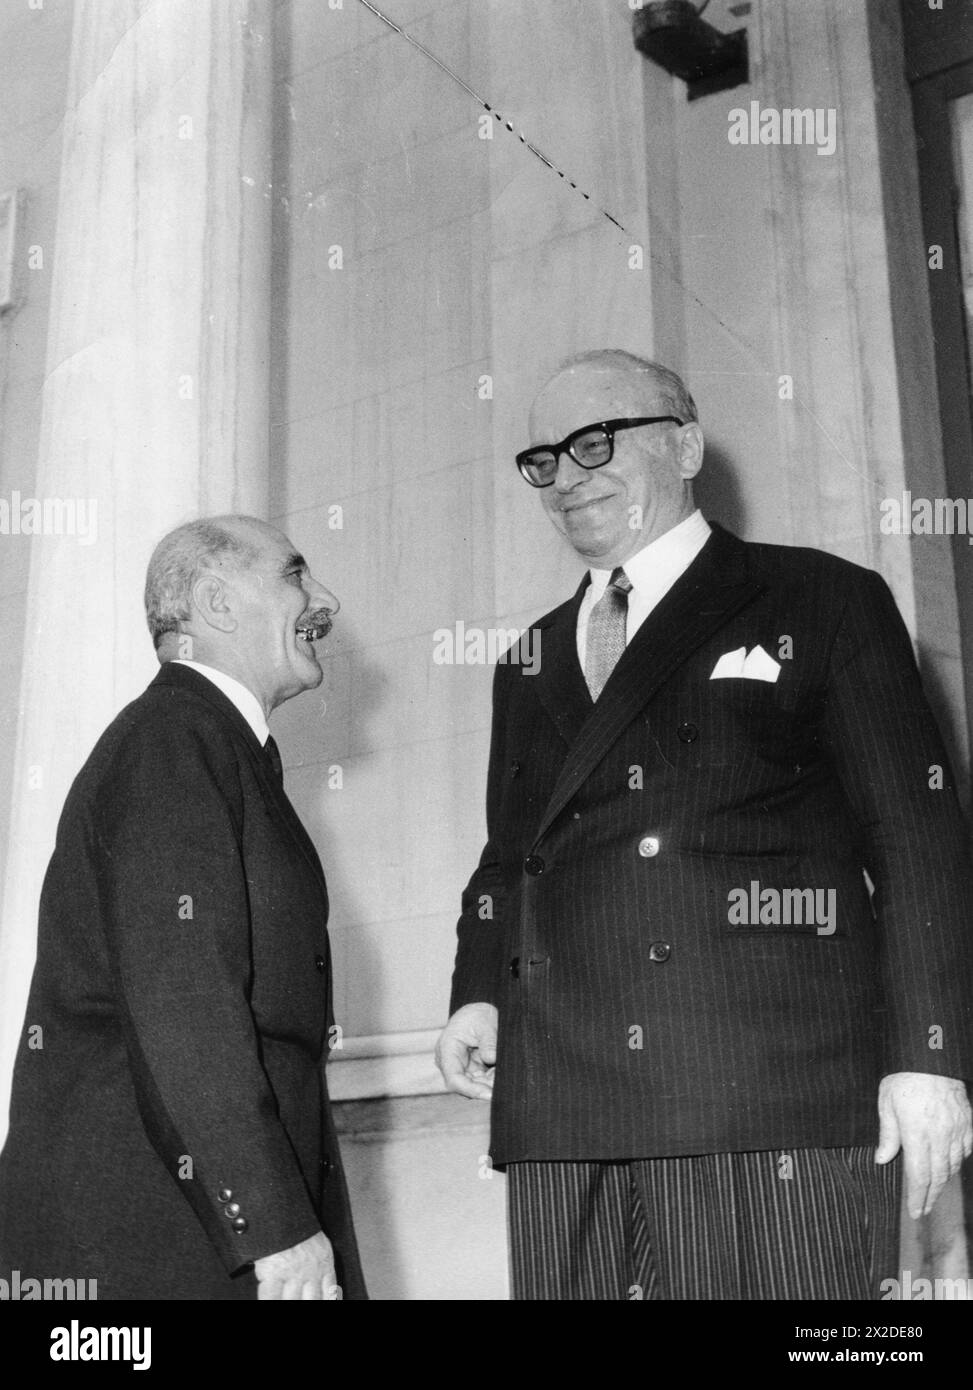 Stephanopoulos, Stephanos, 1898 - 4.10.1982, homme politique grec, premier ministre de Grèce 1965 - 1967, ADDITIONAL-RIGHTS-LEARANCE-INFO-NOT-AVAILABLE Banque D'Images